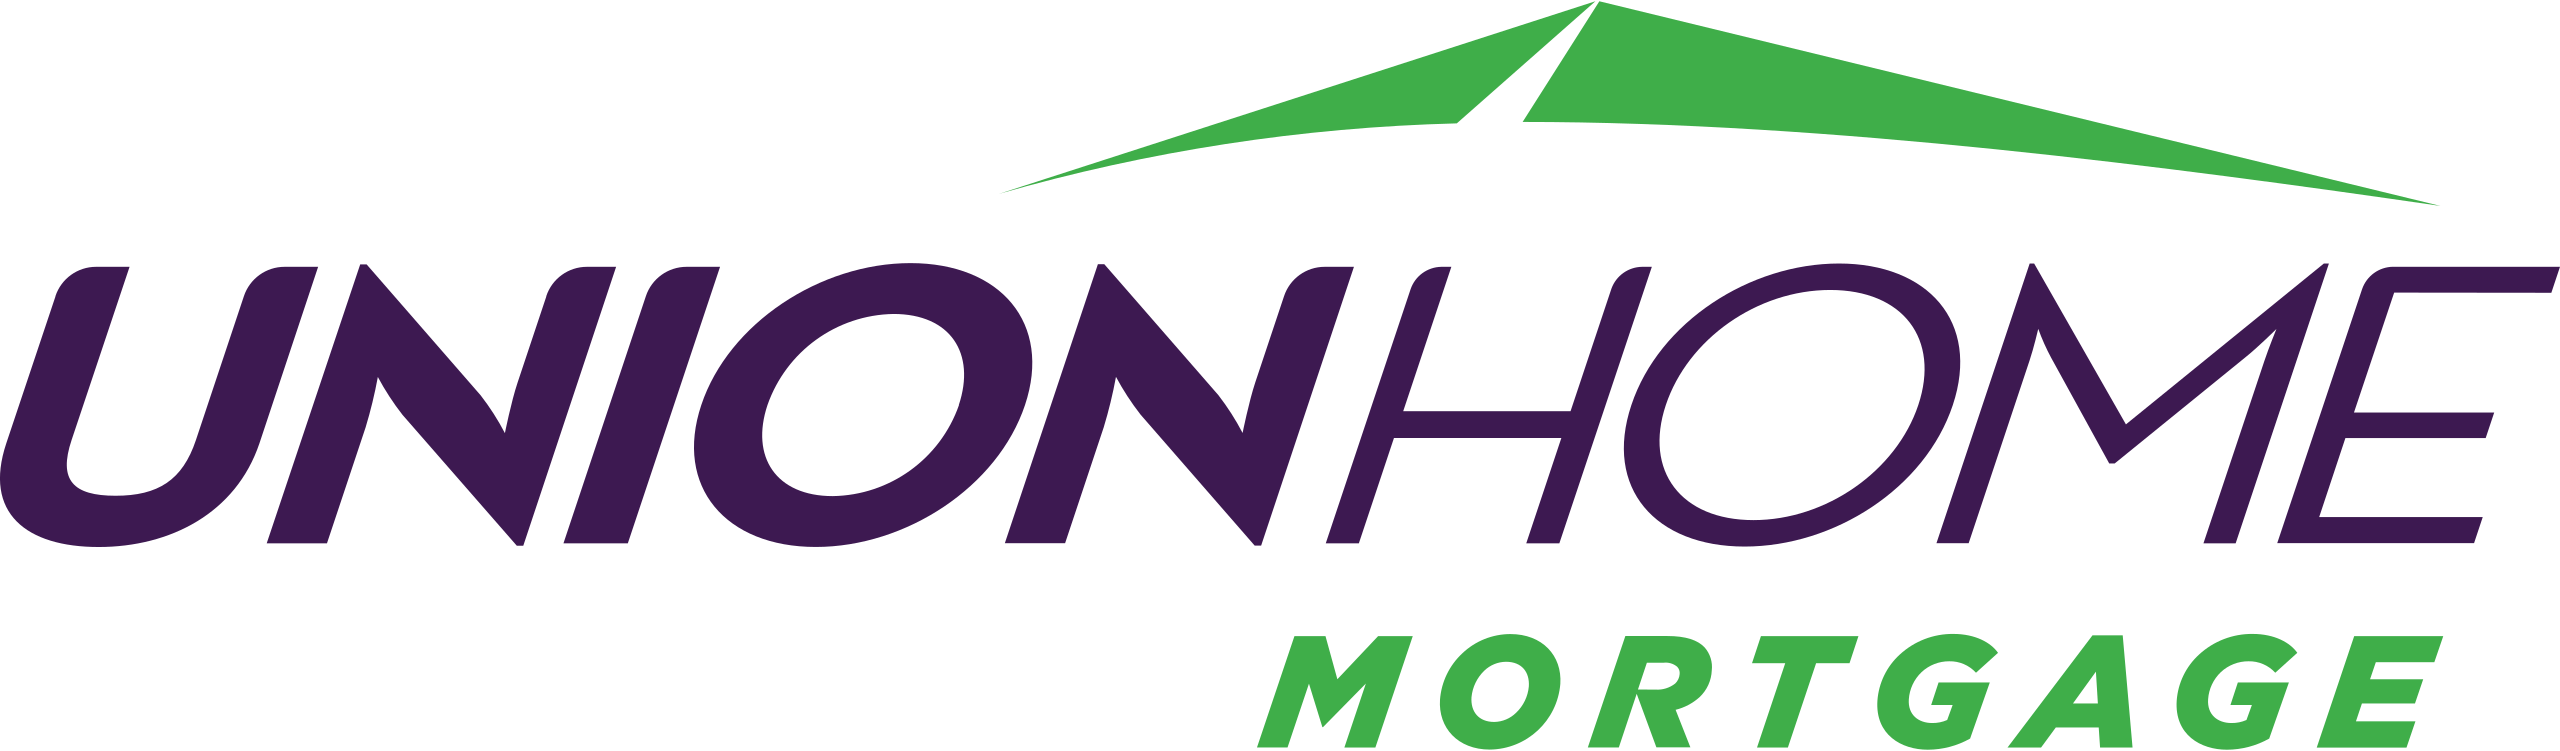 Union_Home_Mortgage_logo.svg